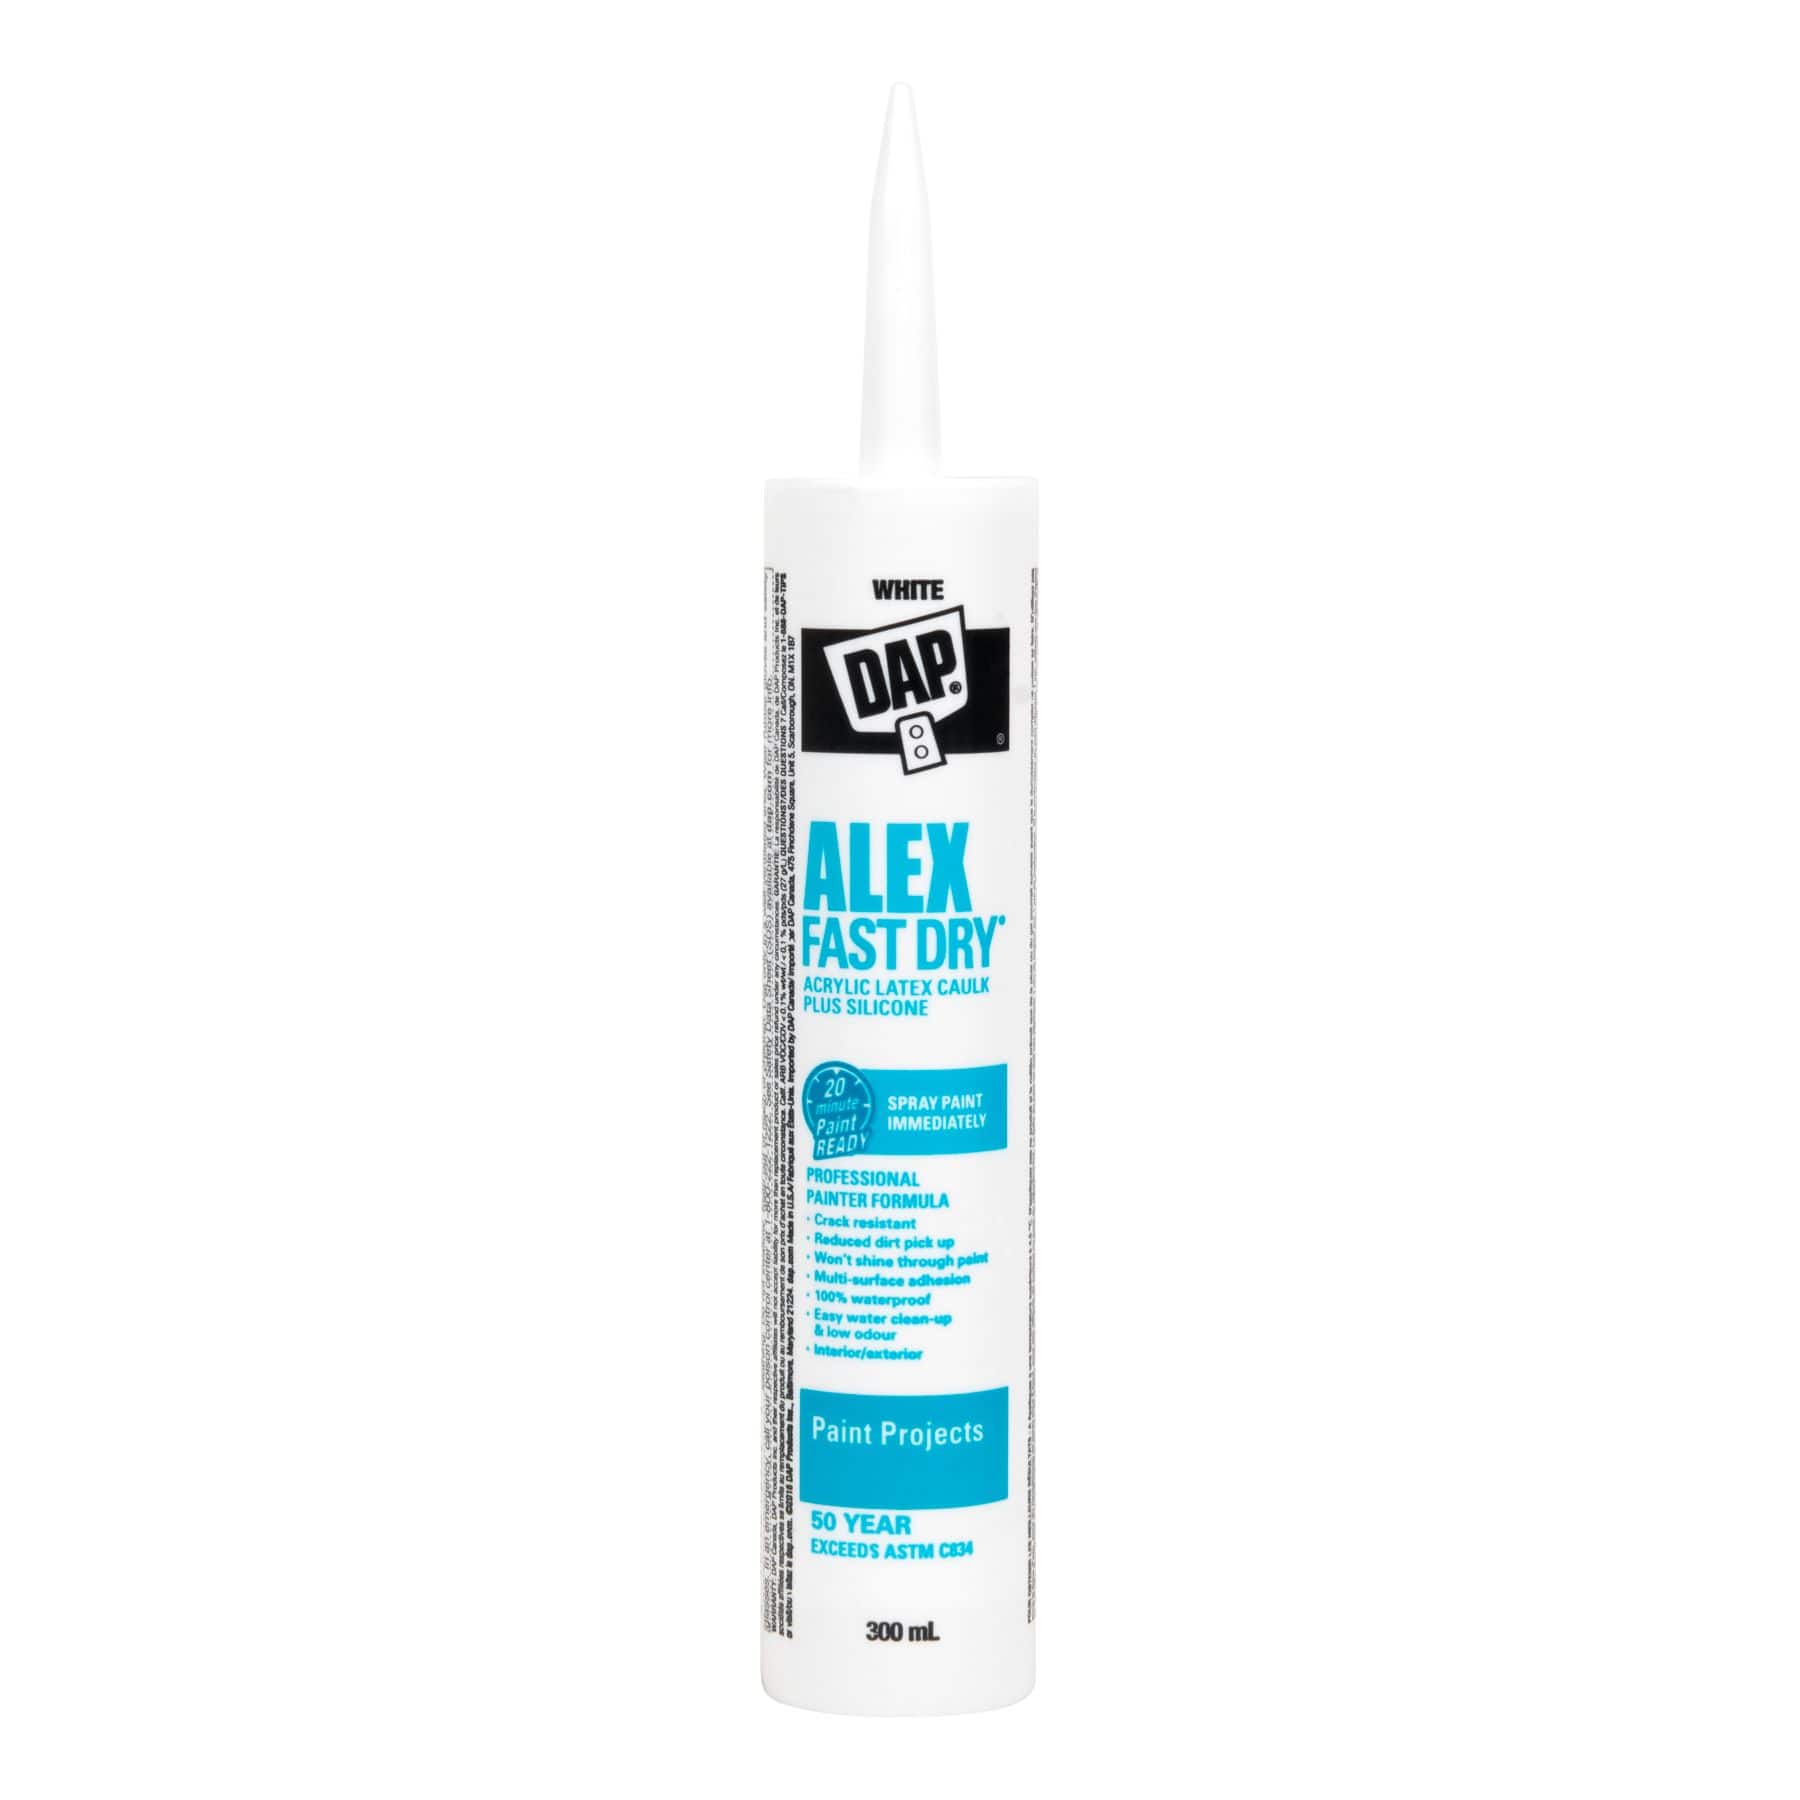 DAP Alex Fast Dry Acrylic Latex Caulk Plus Silicone, Waterproof, Paintable,  White, 300-mL